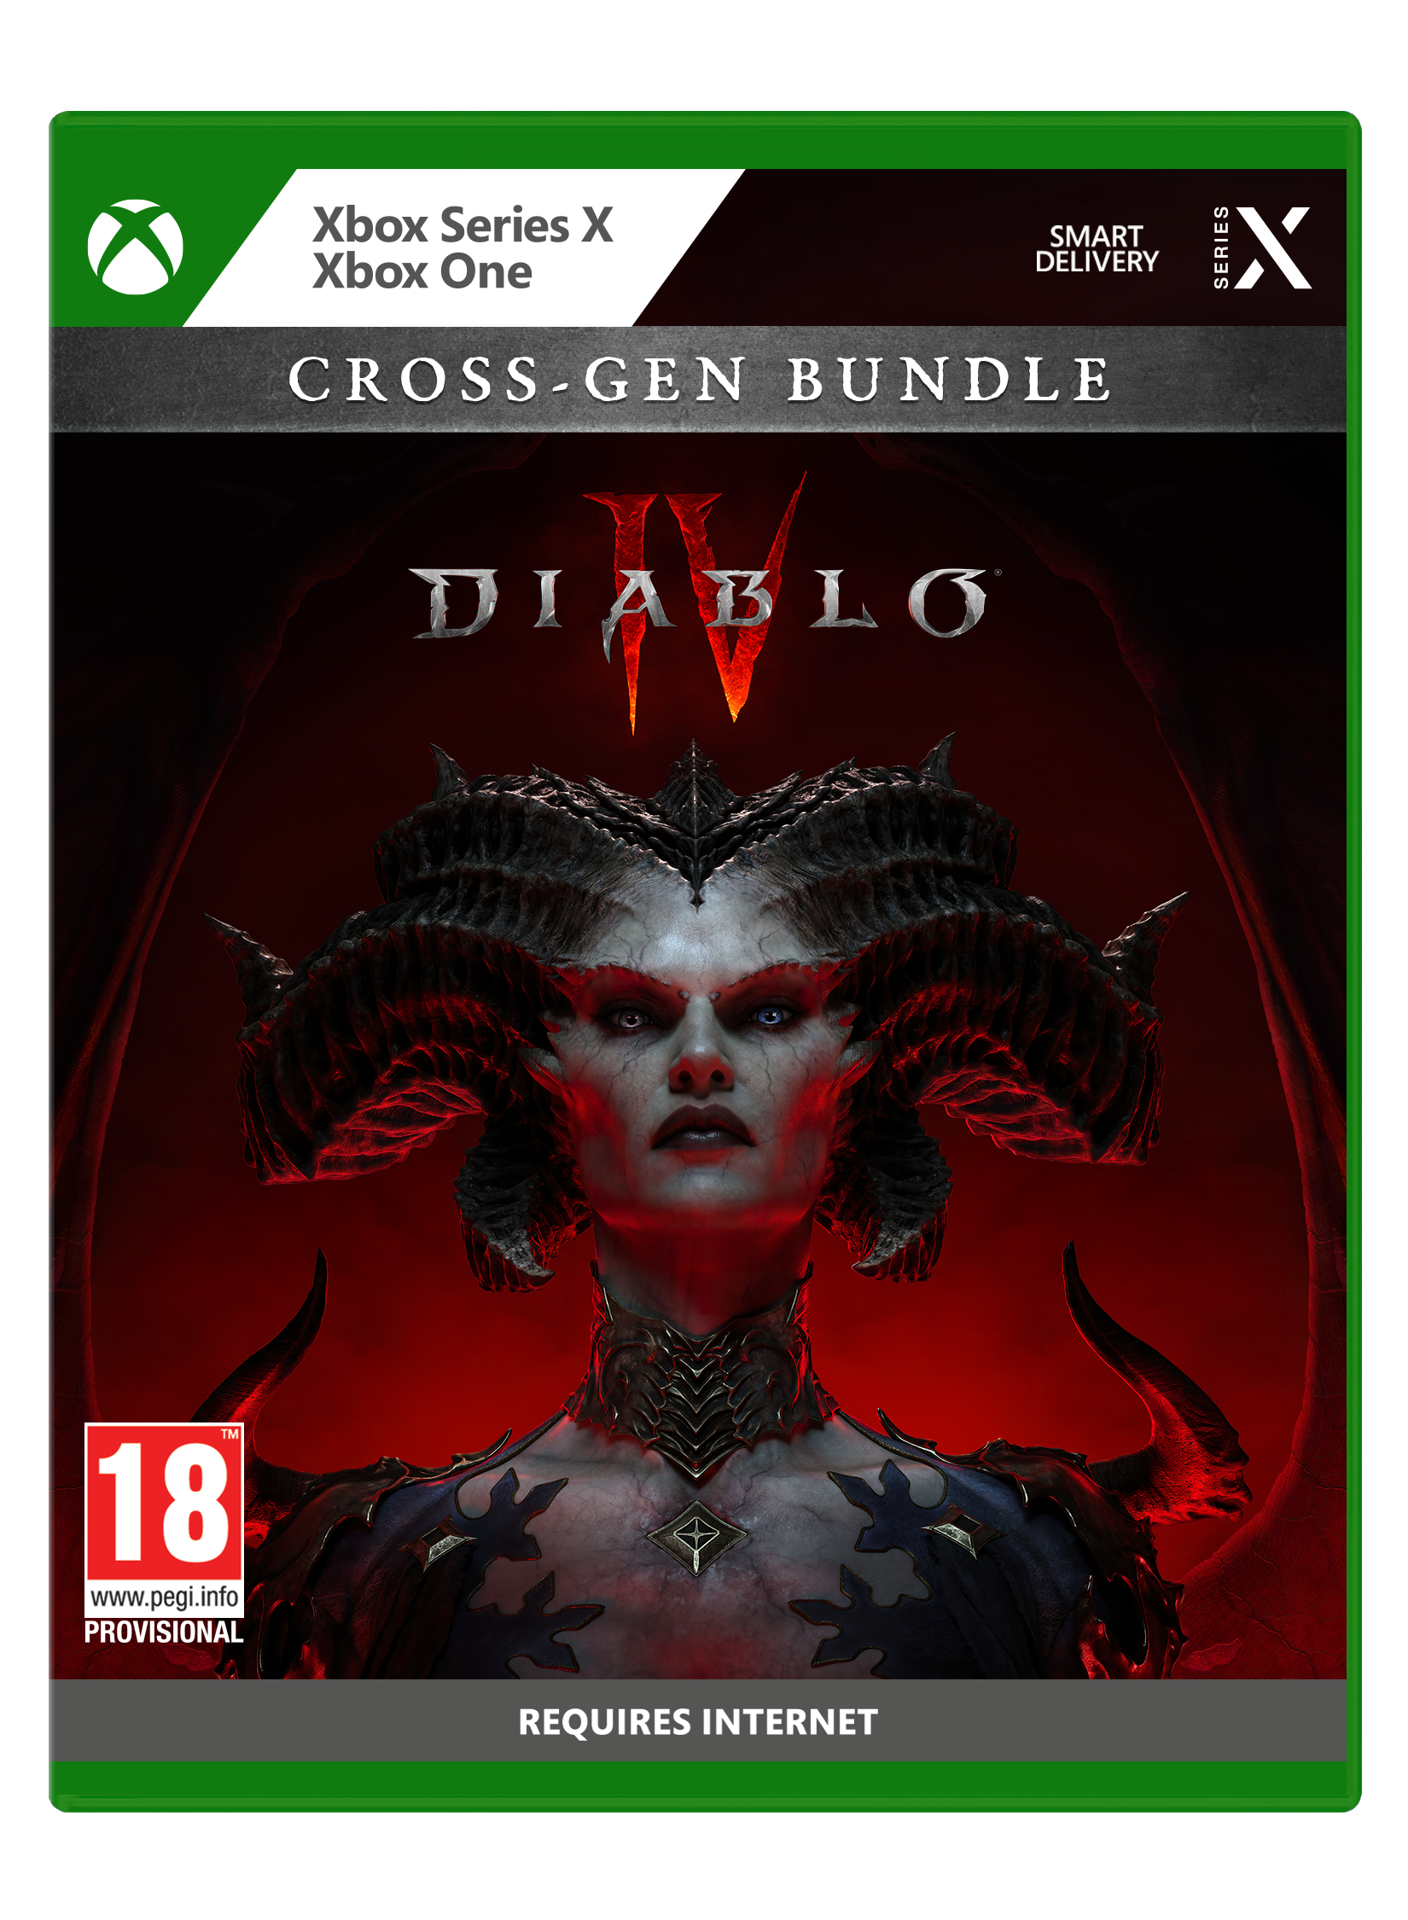 Diablo IV - Pack Cross-Gen - Édition Day One